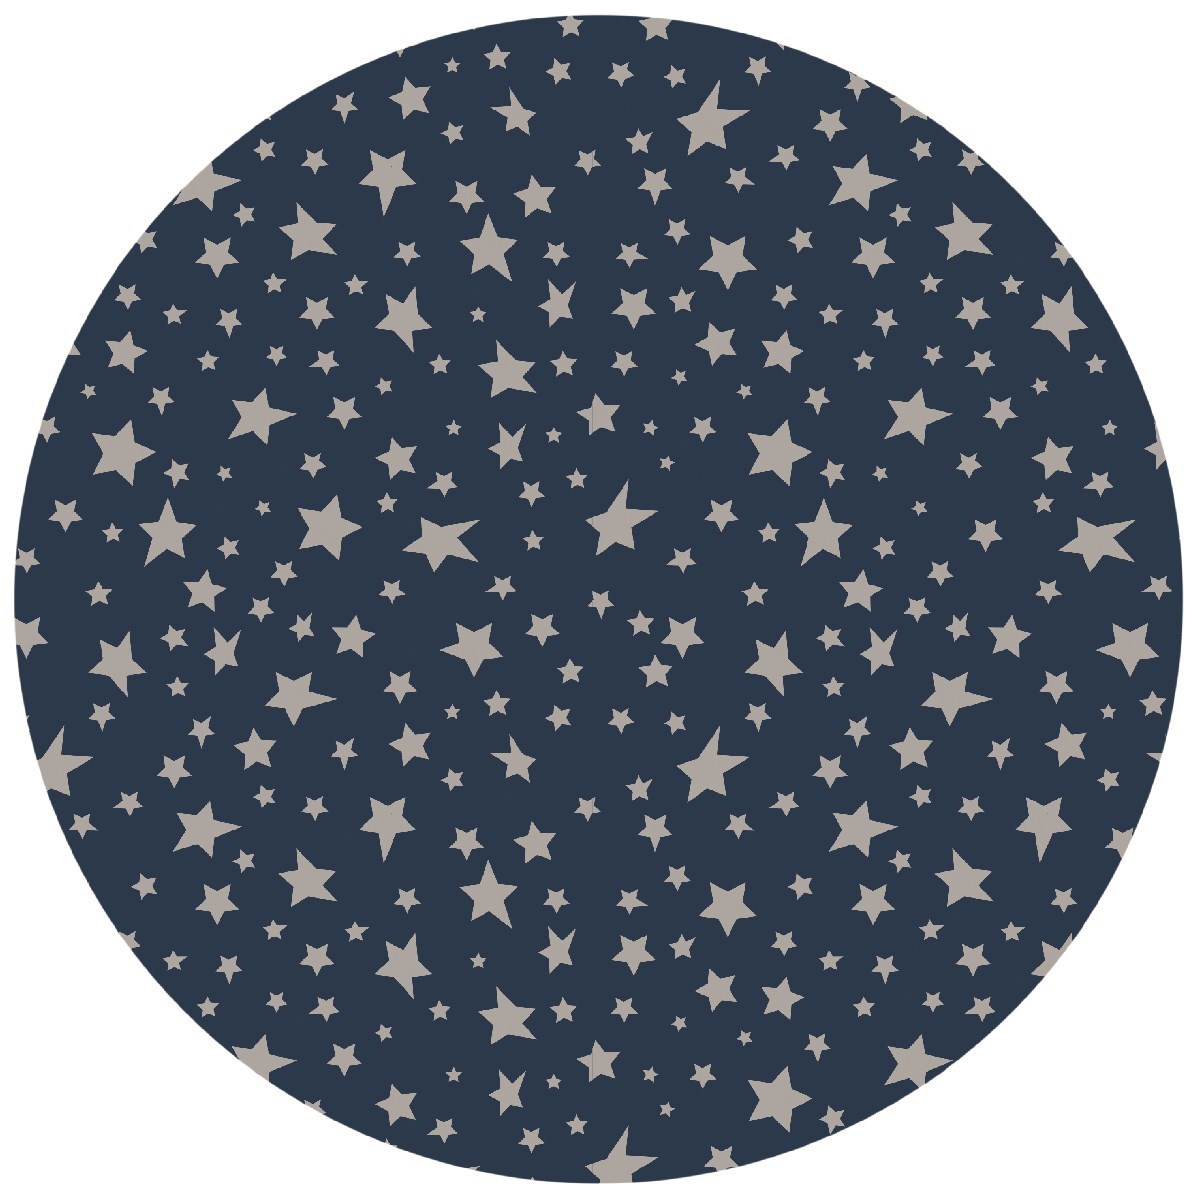 10" Masonite Starry Night Cake Board - Navy with Stars (4mm Thick)